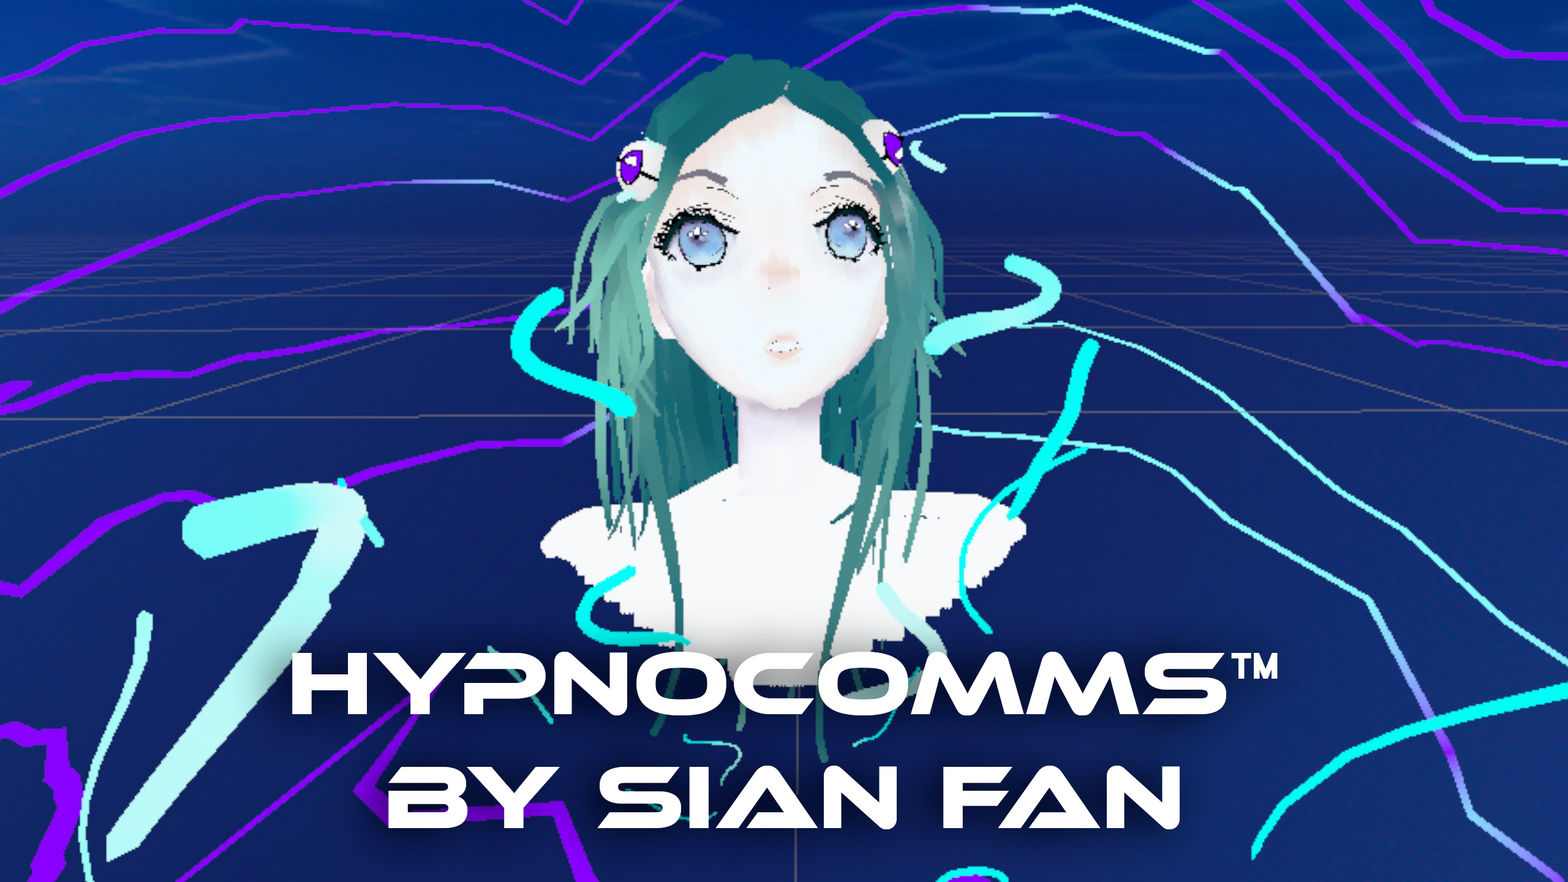 HypnoComms